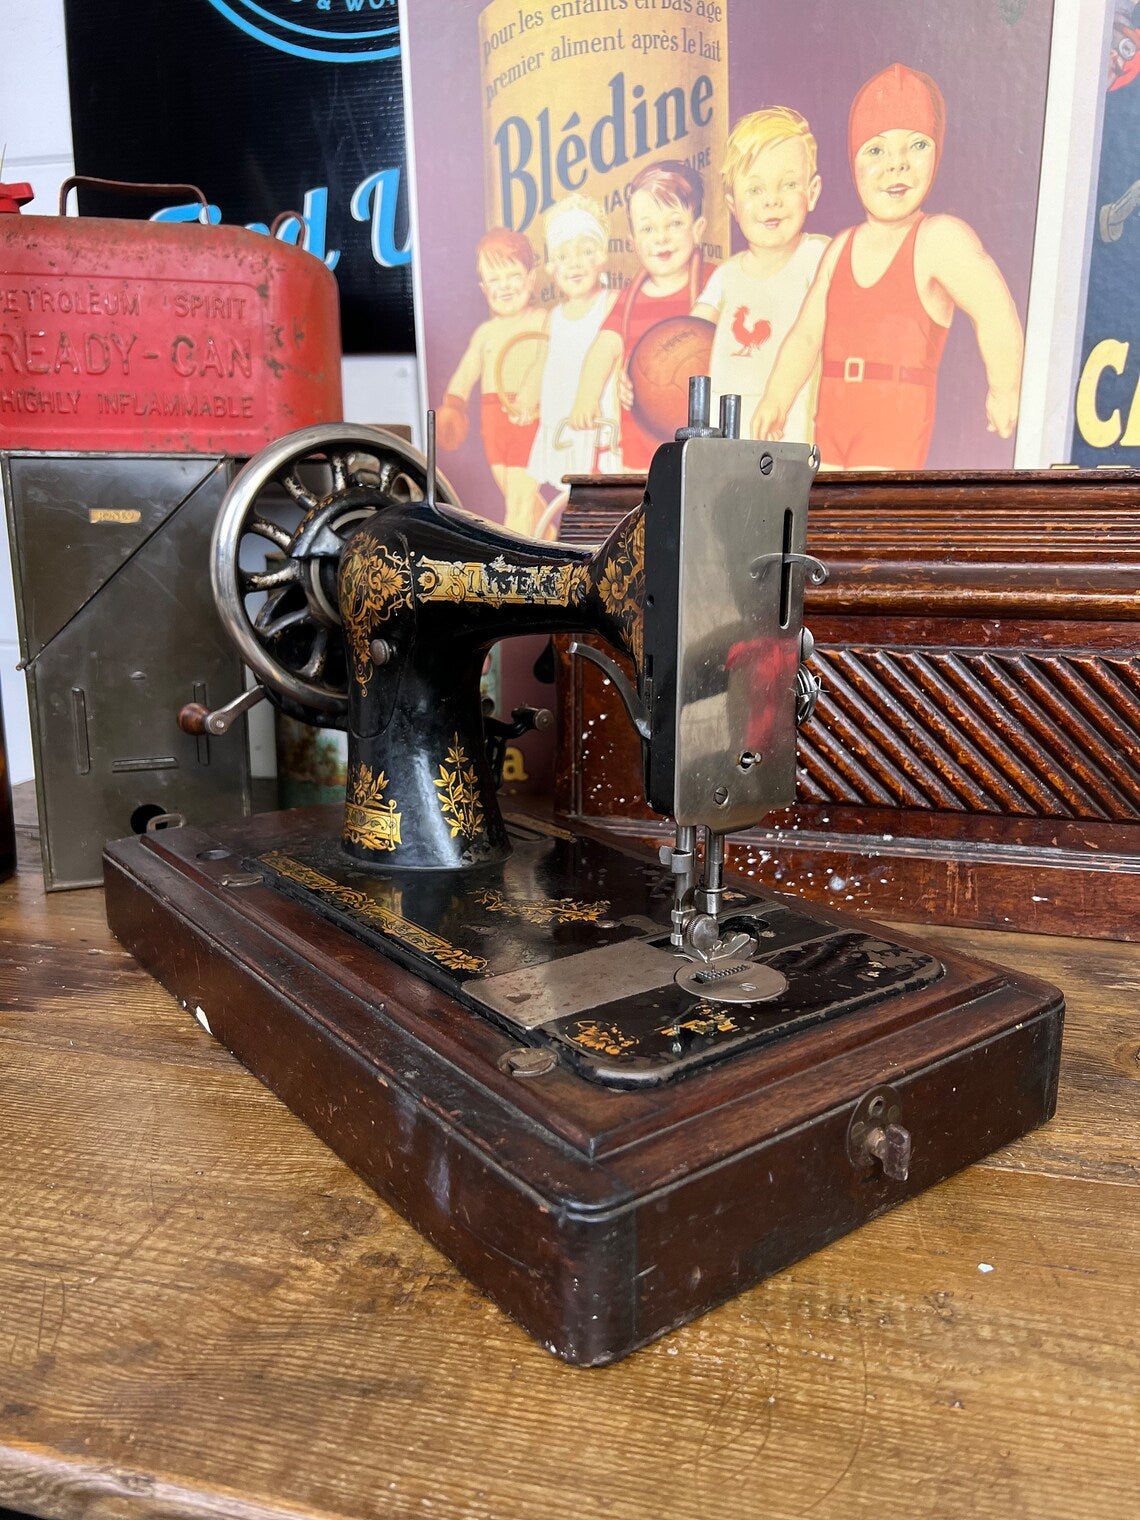 Vintage Singer Sewing Machine Hand Crank Coffin Case Working - Dates 1899 Rustic Home Decor